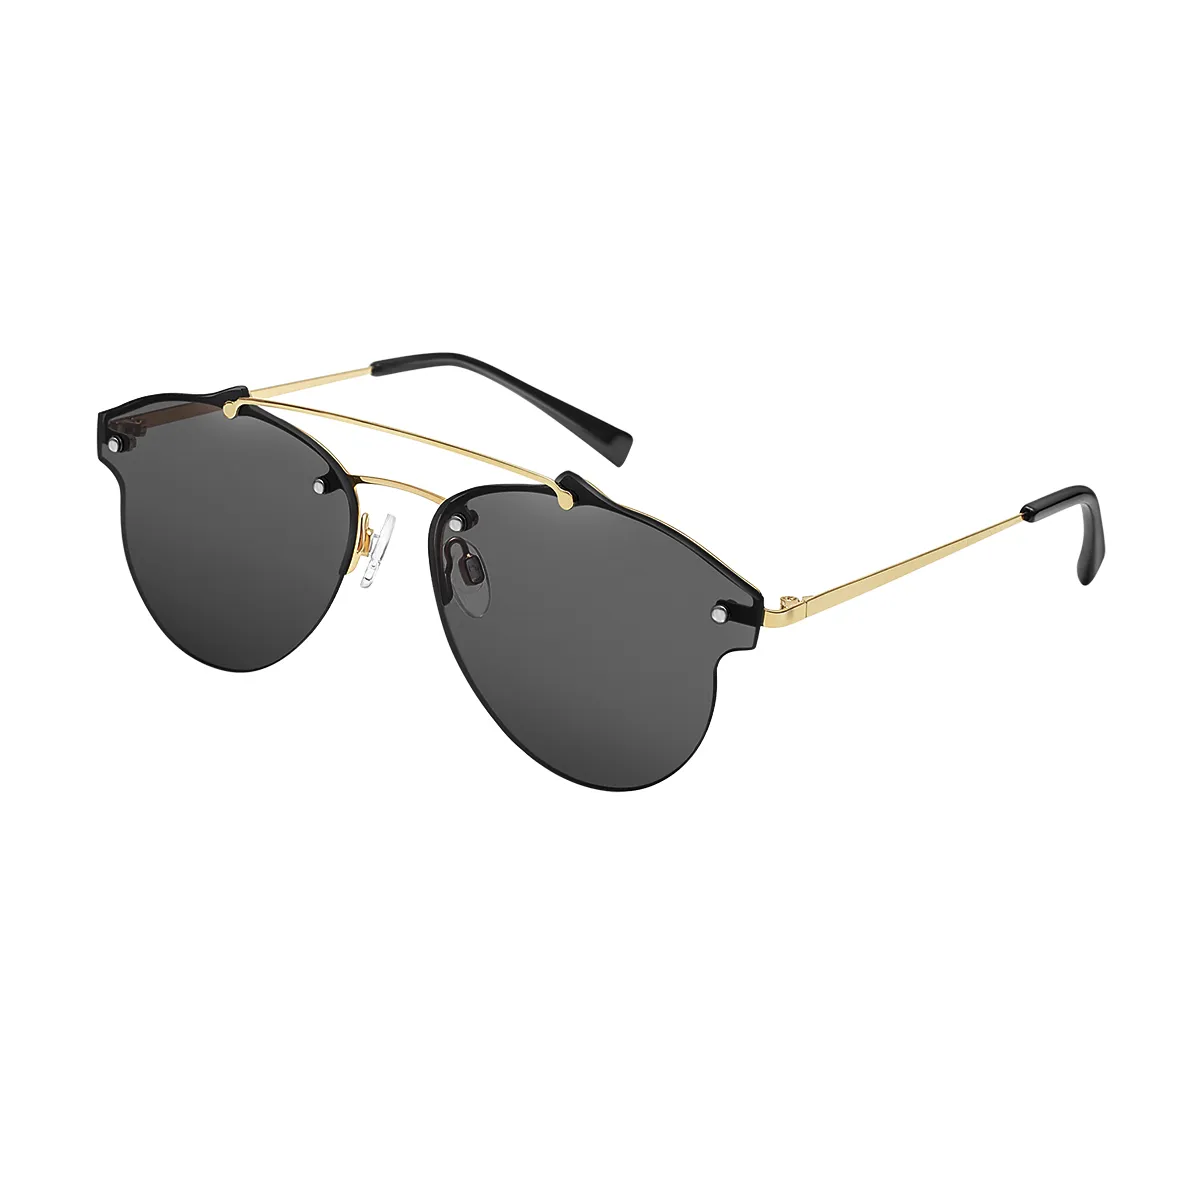 Fashion Aviator Gold/1 Sunglasses for Women & Men